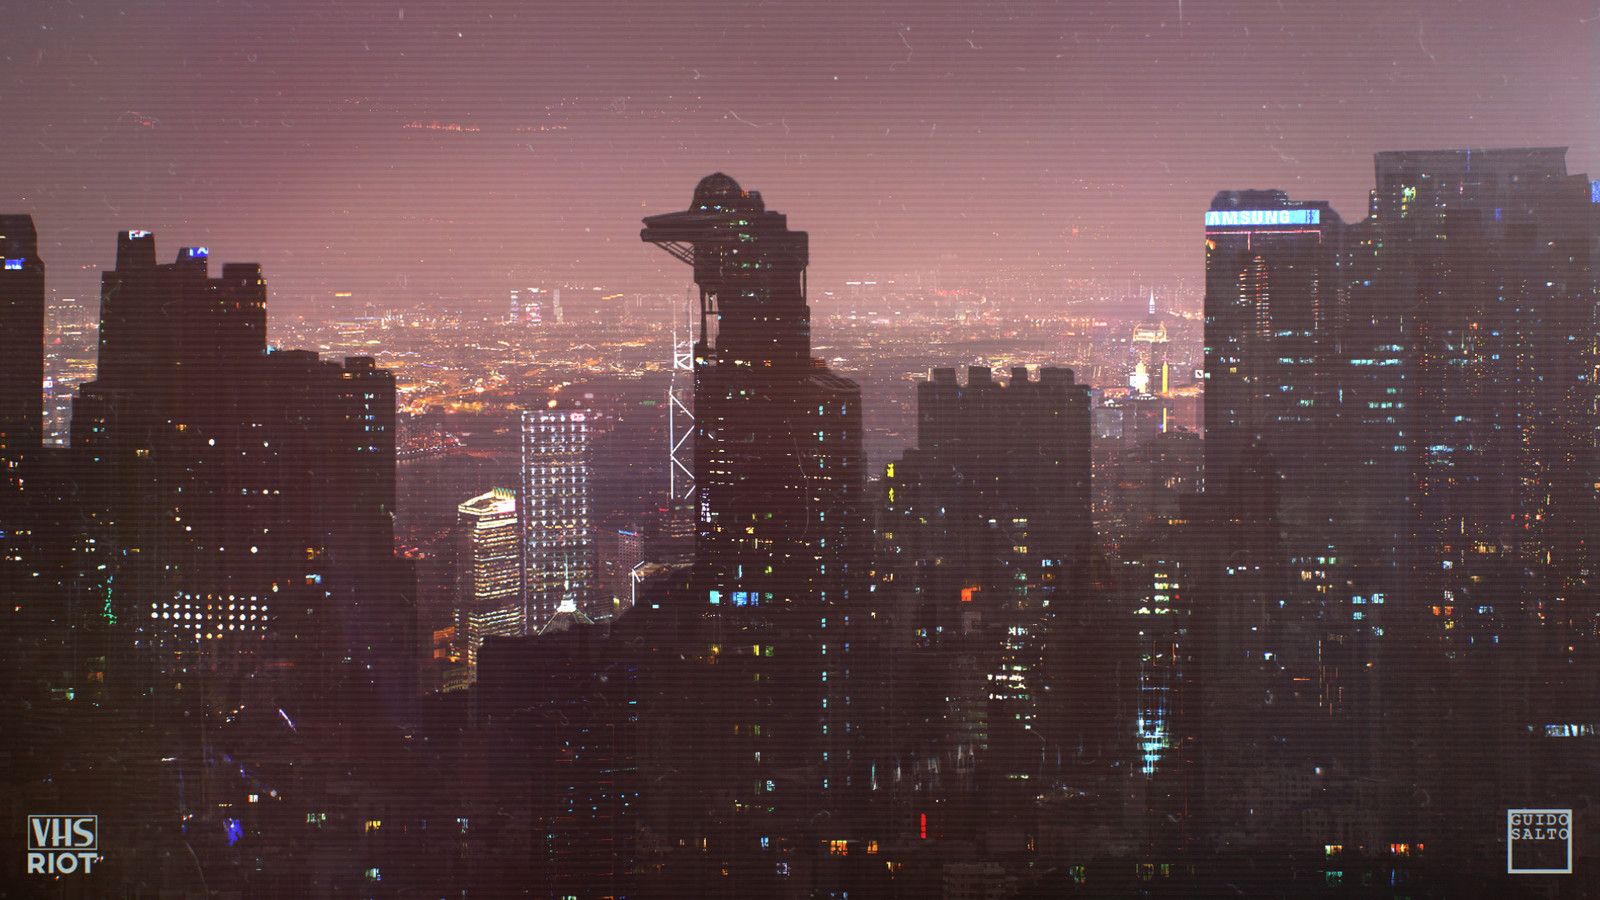 Quick Photobash sketch based on Hong Kong Skyline